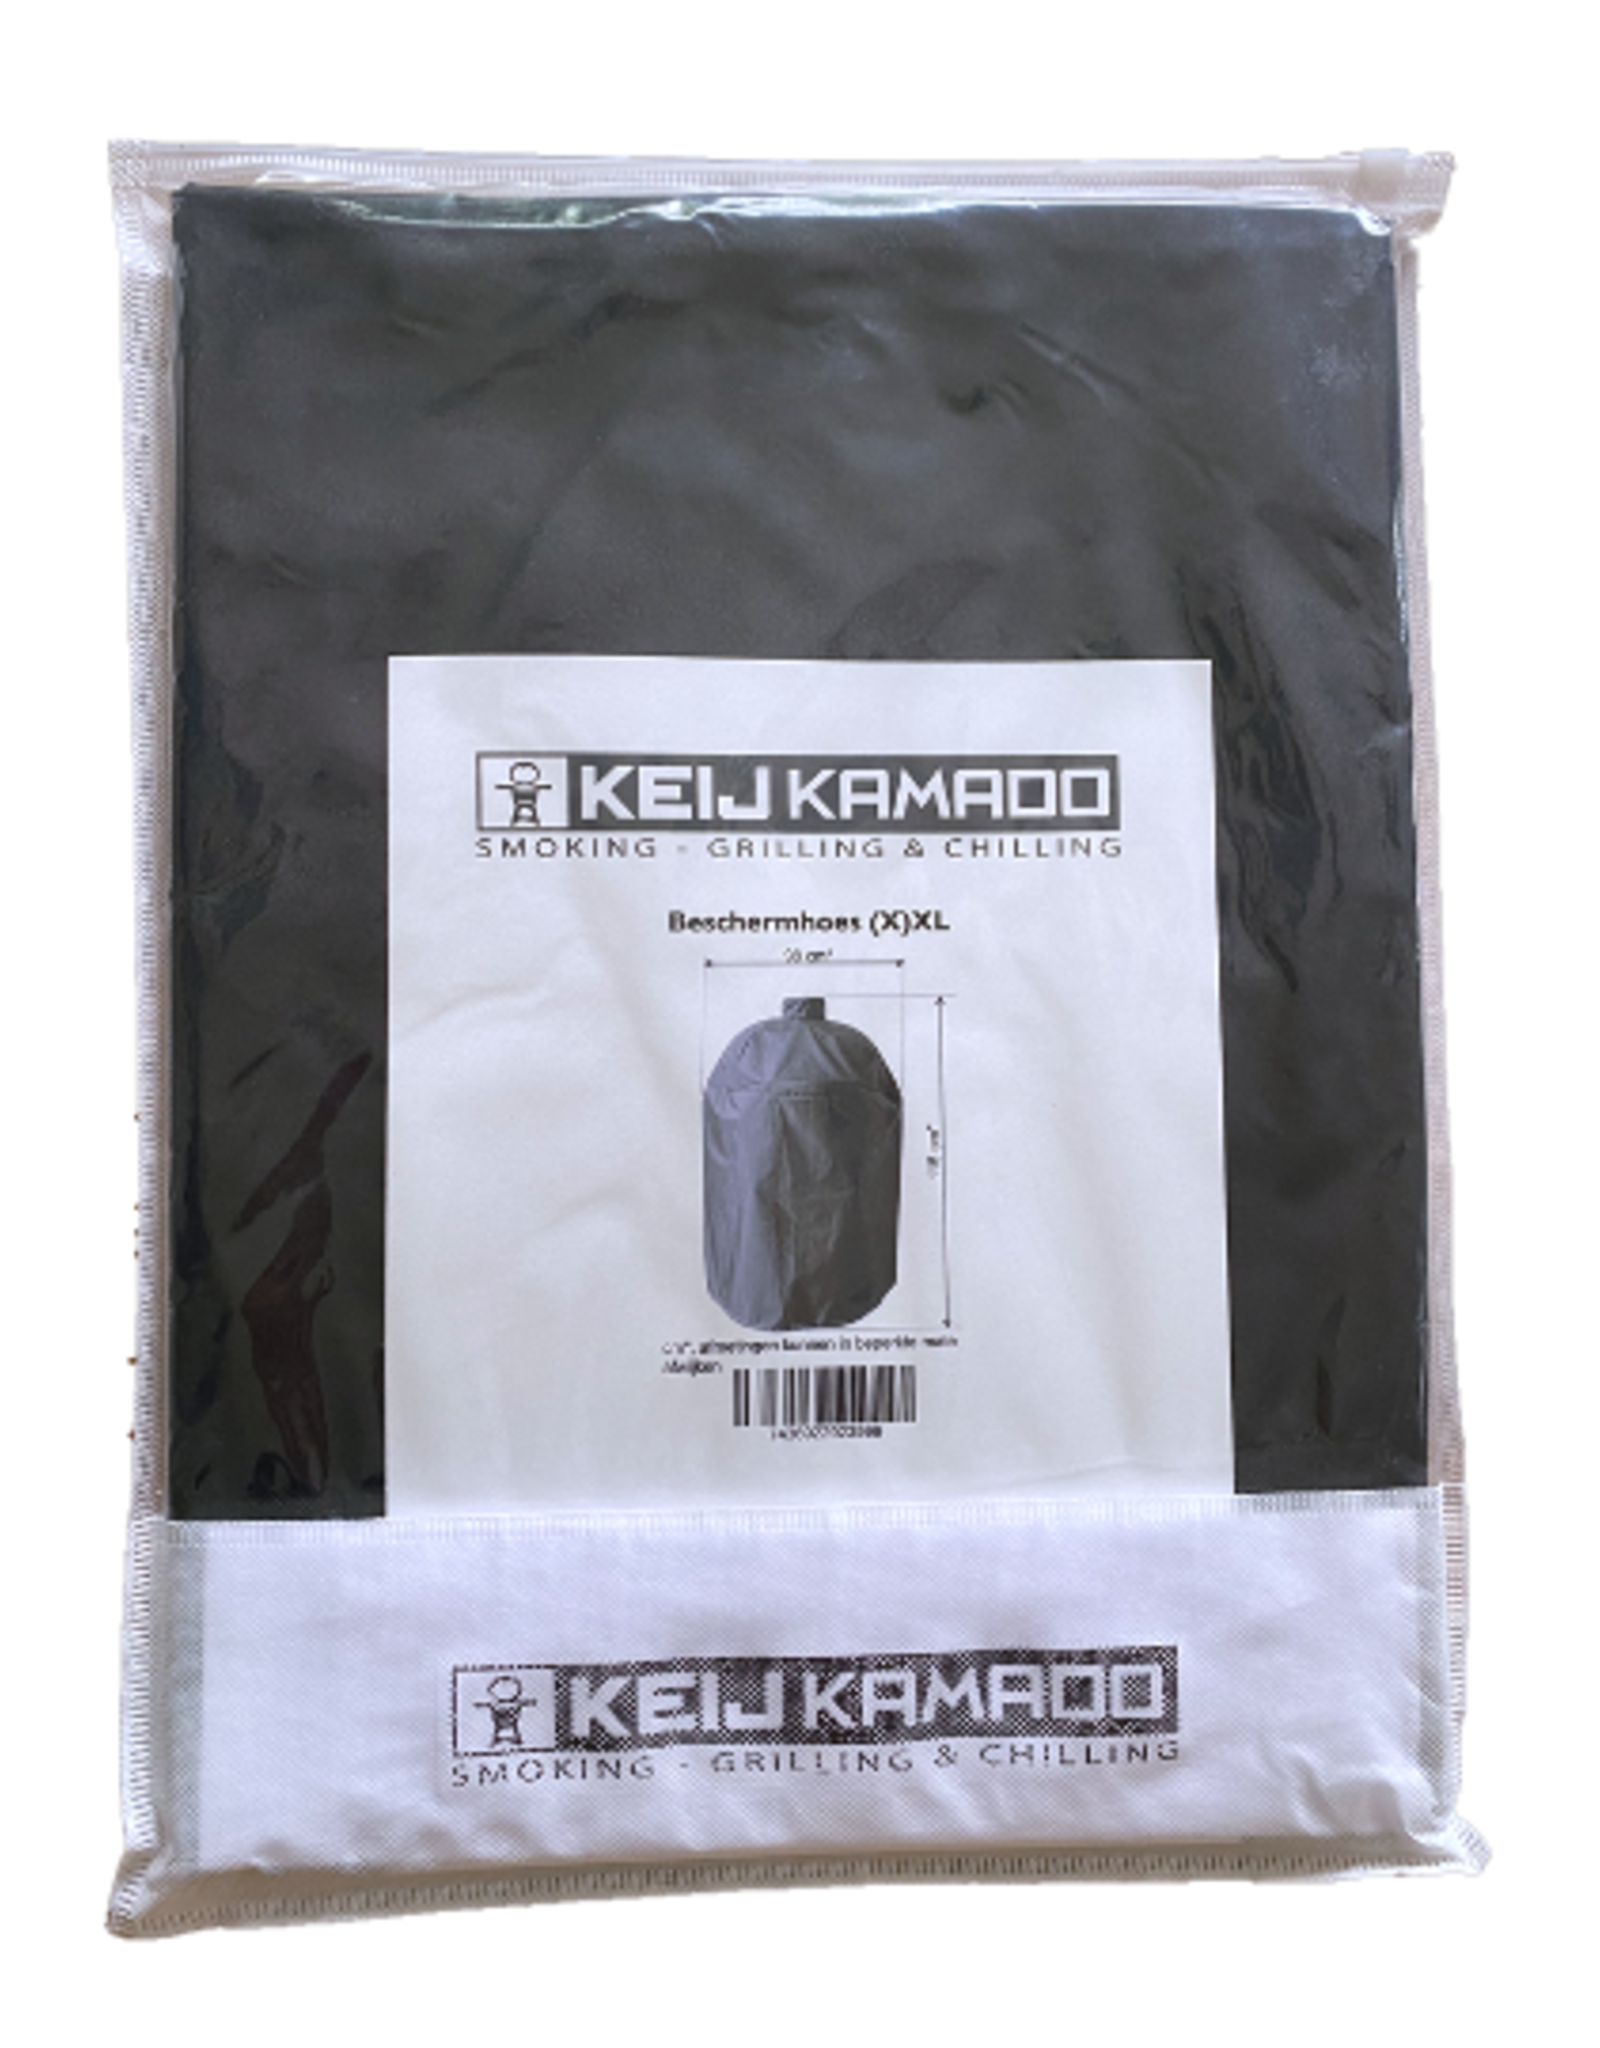 Keij Kamado® Kamado beschermhoes (X)XL - 23/25 inch